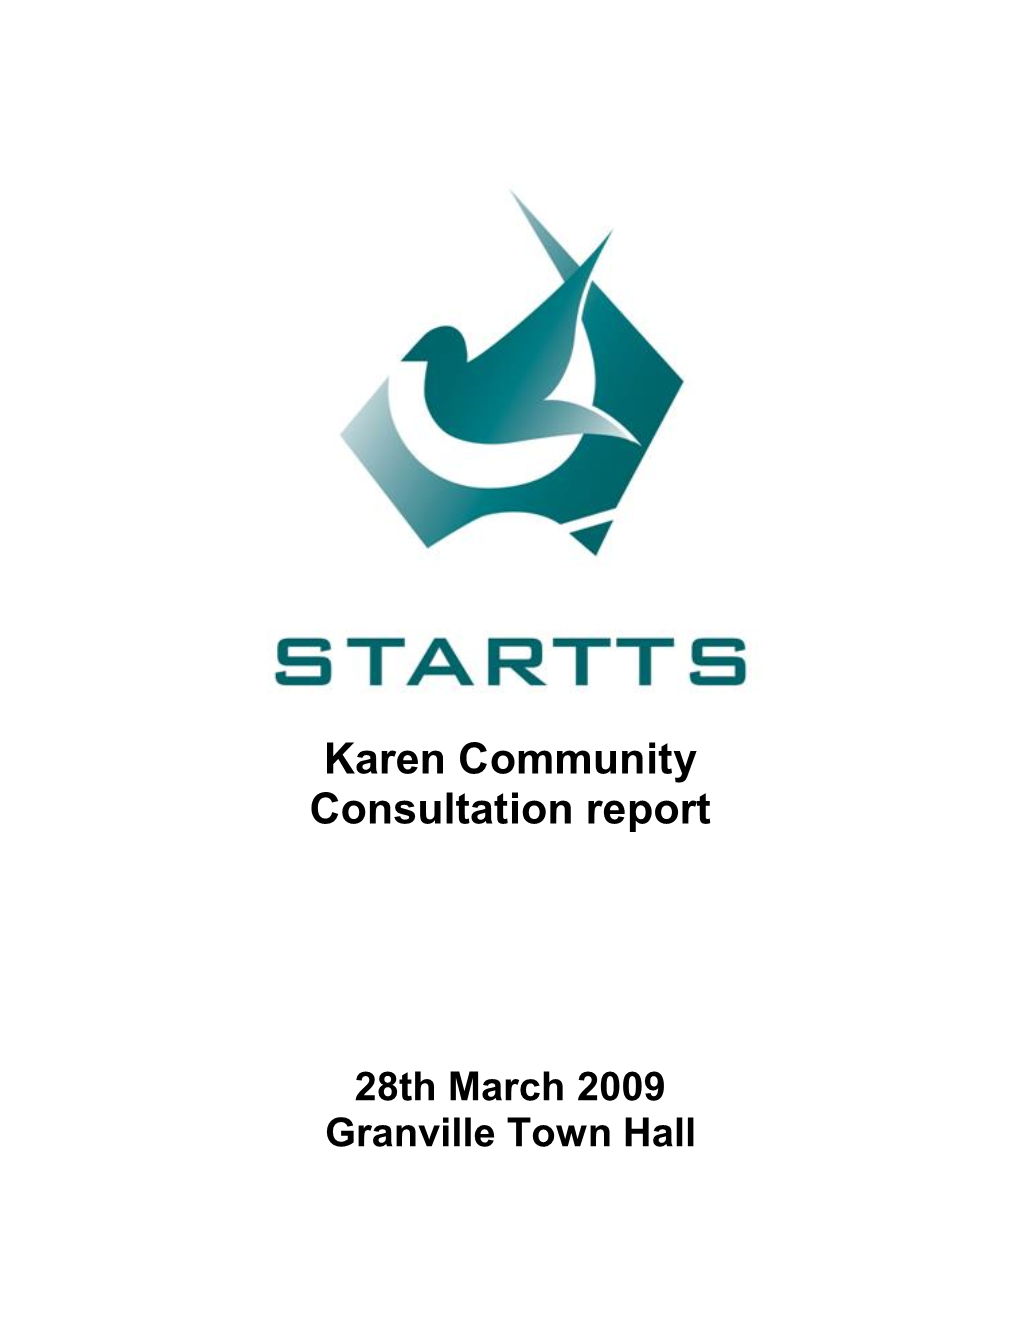 Karen Community Consultation Report